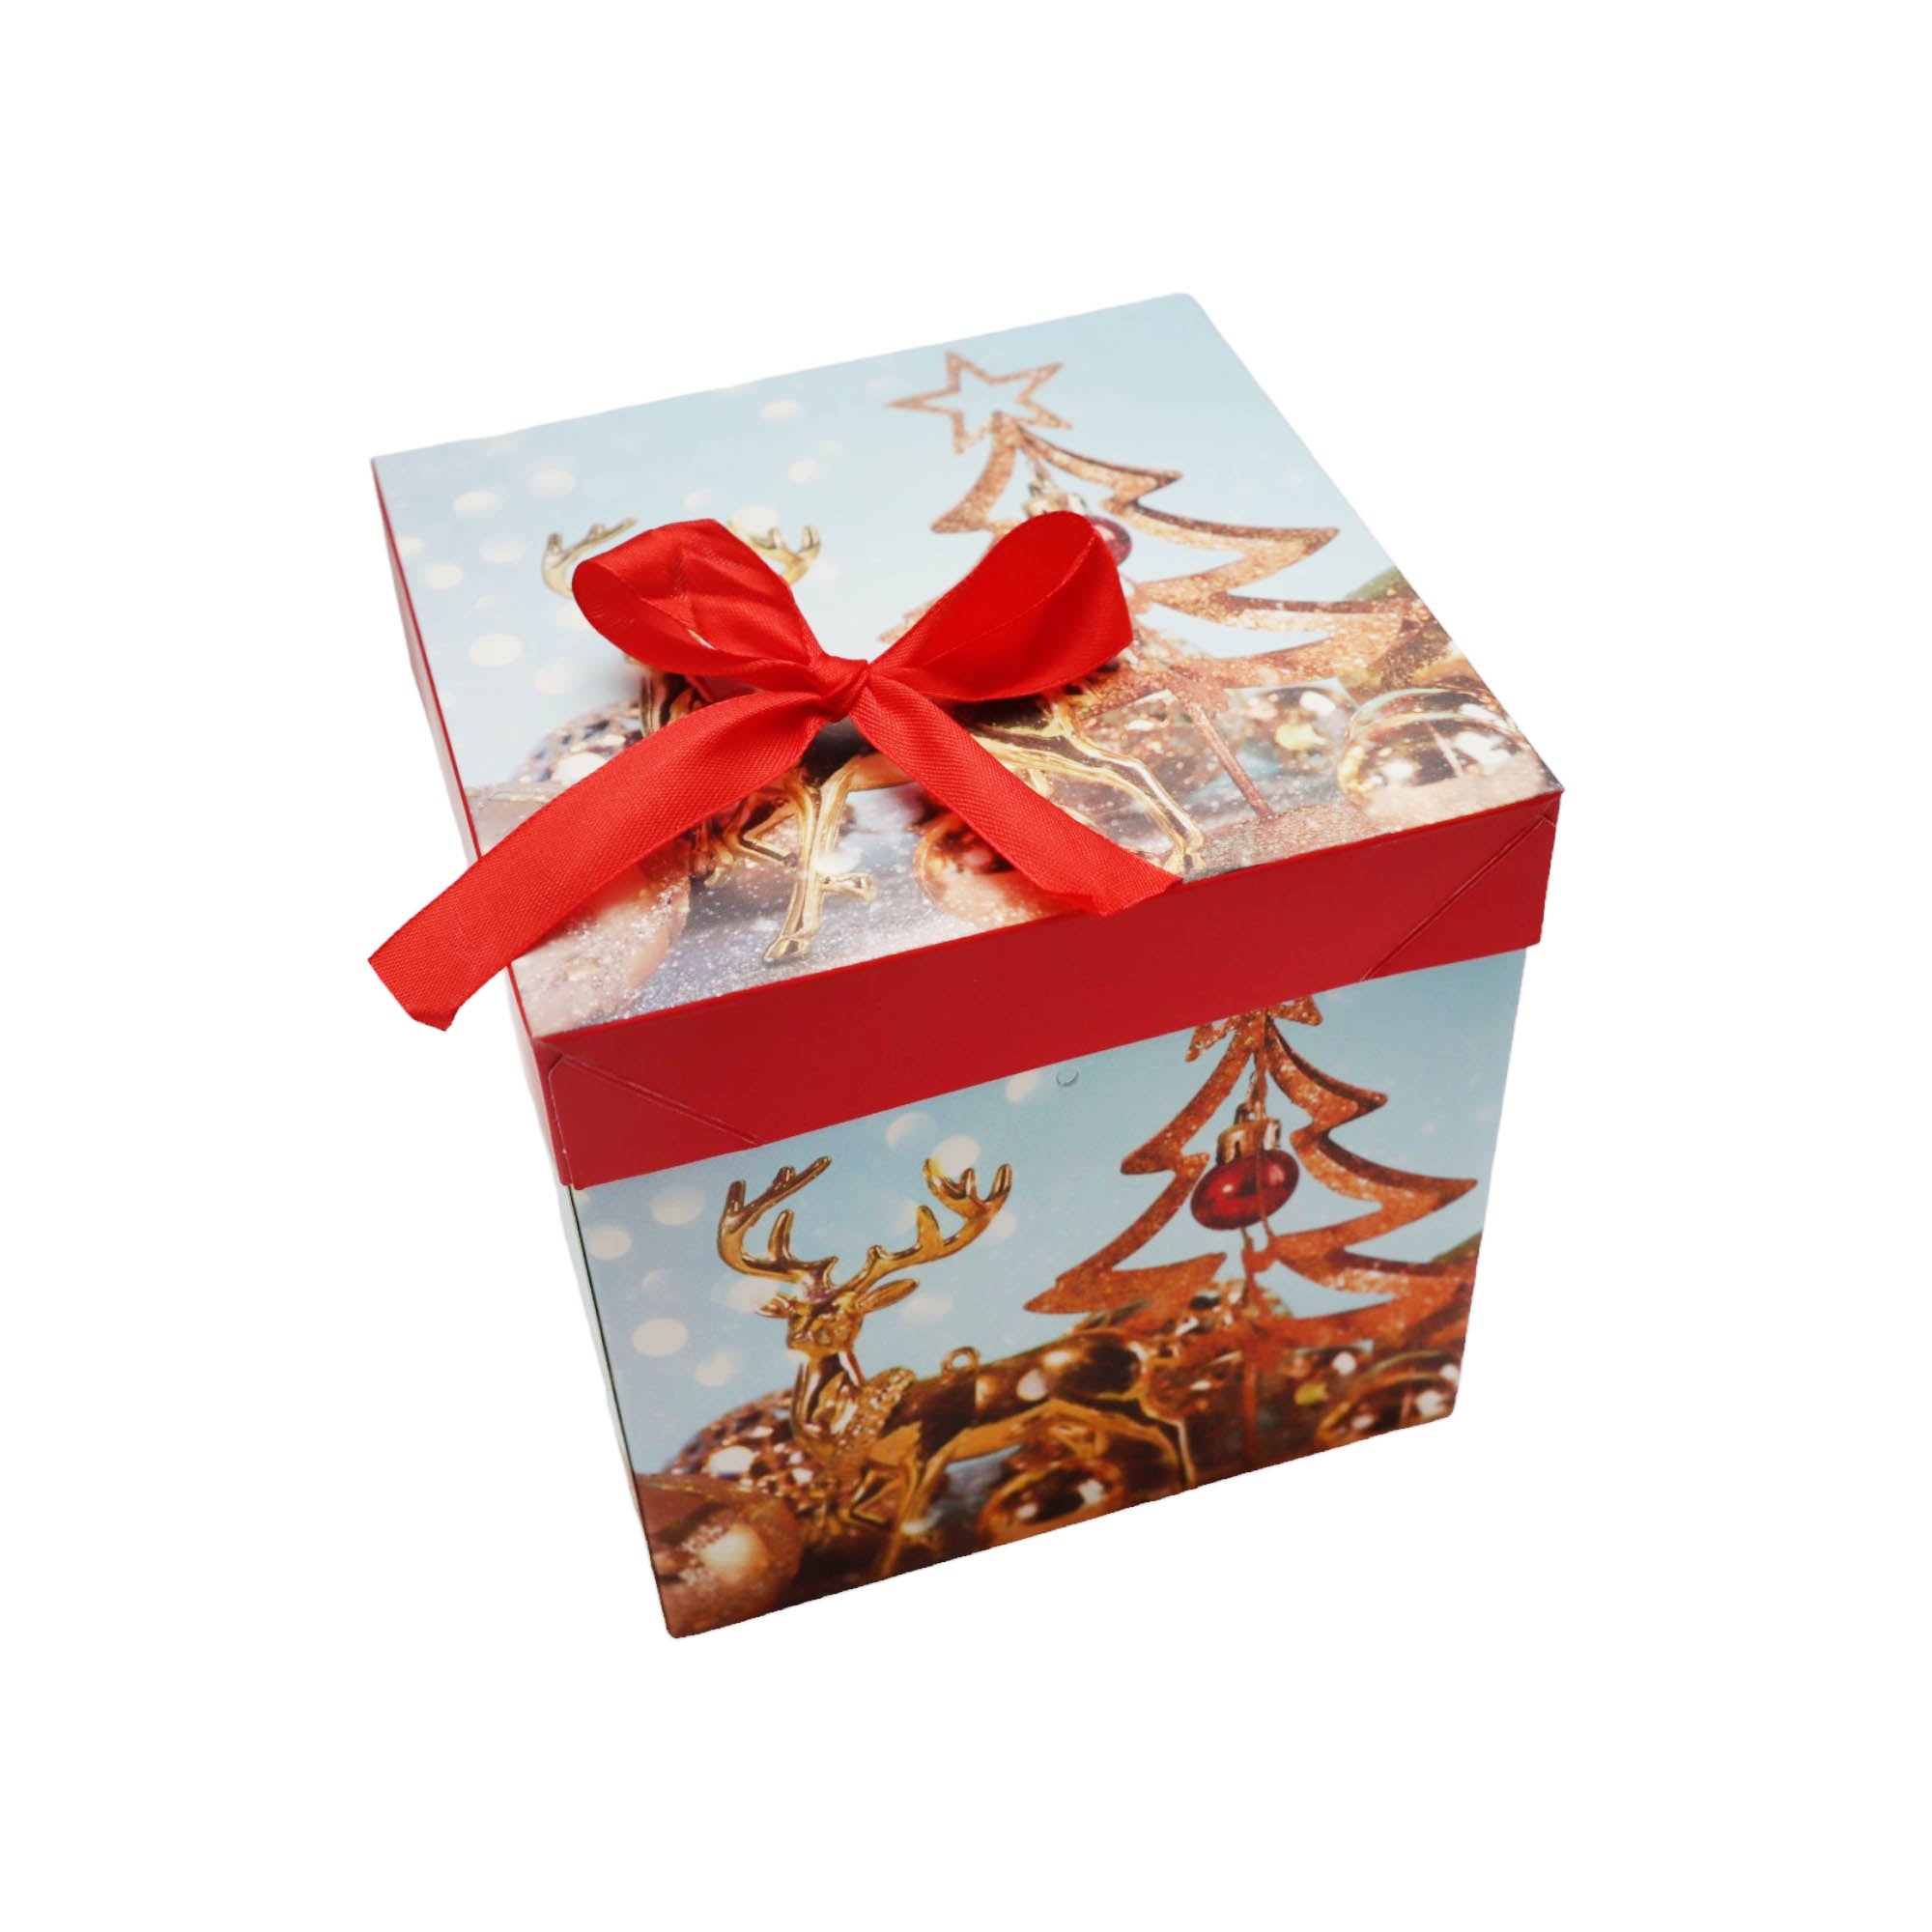 Decorative Festive Gift Folding Box 15x15x15cm Square